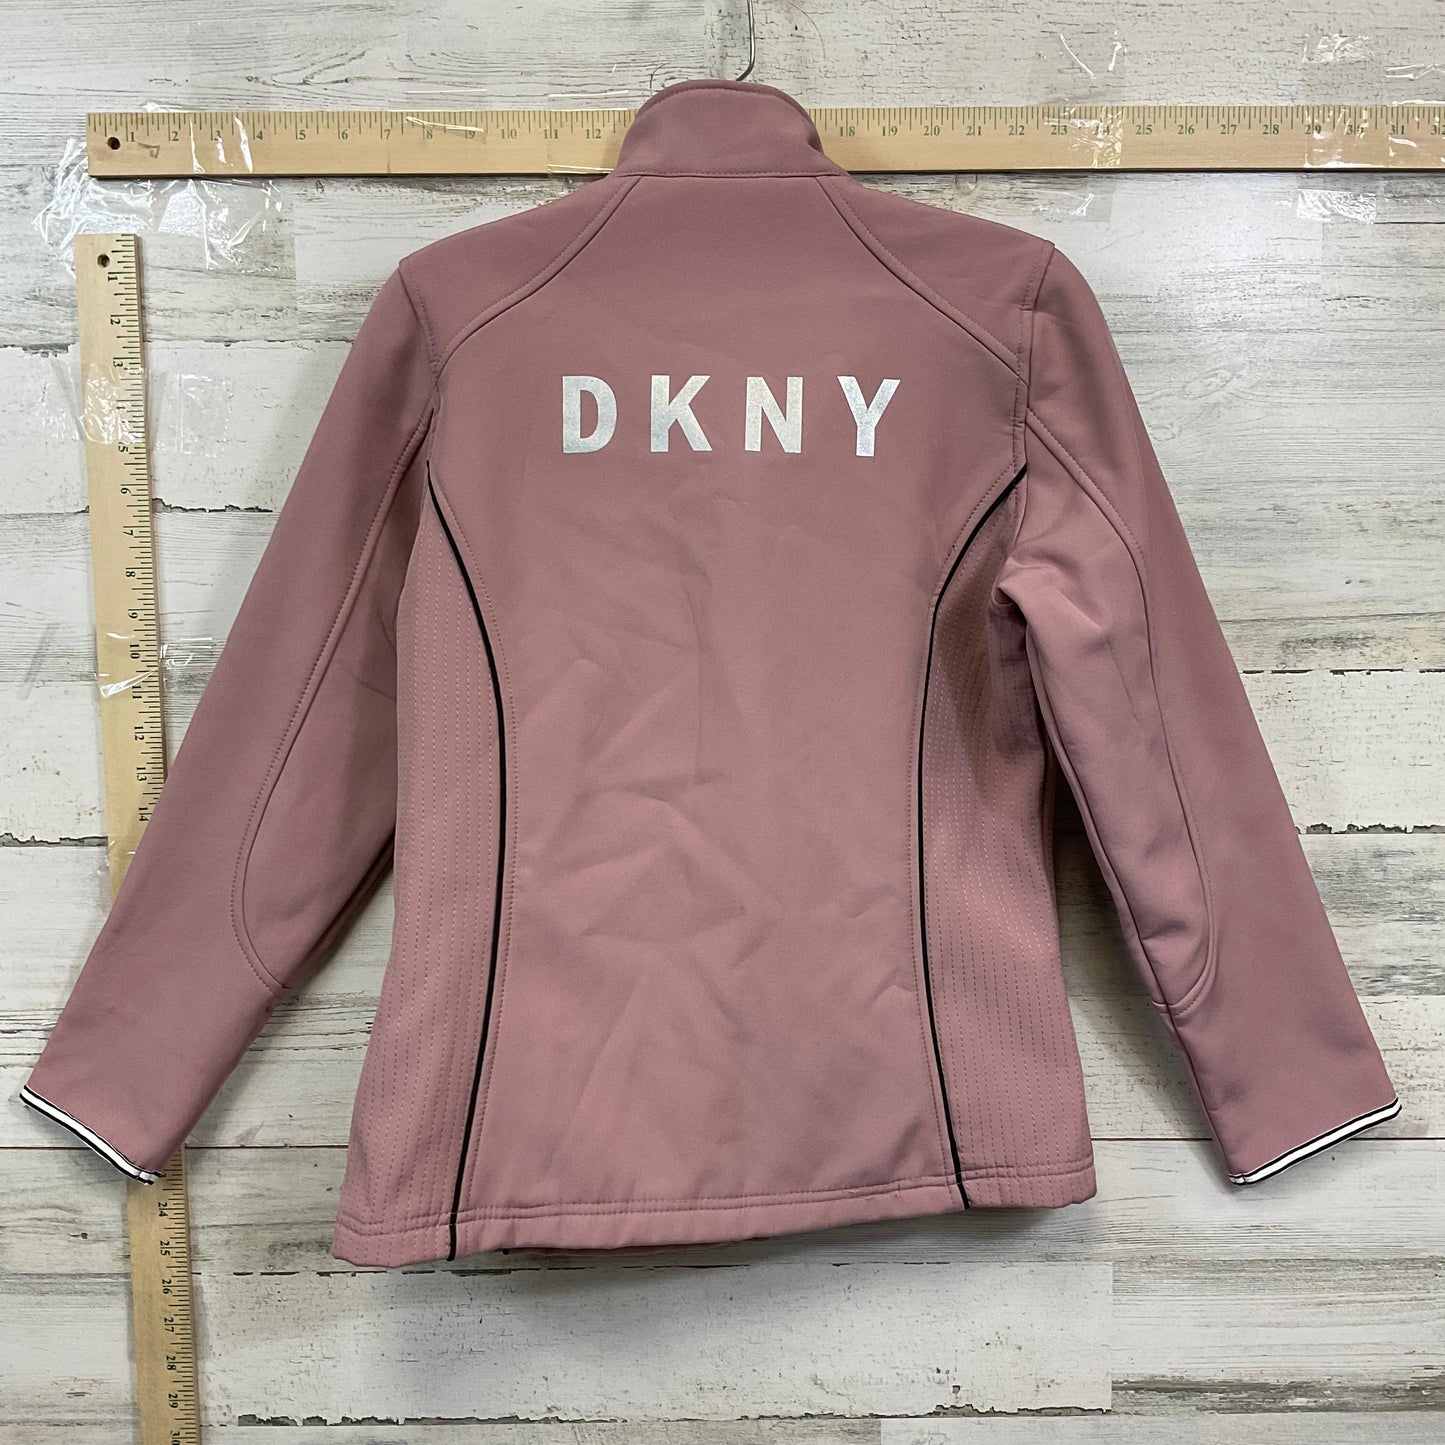 Athletic Jacket By Dkny  Size: L